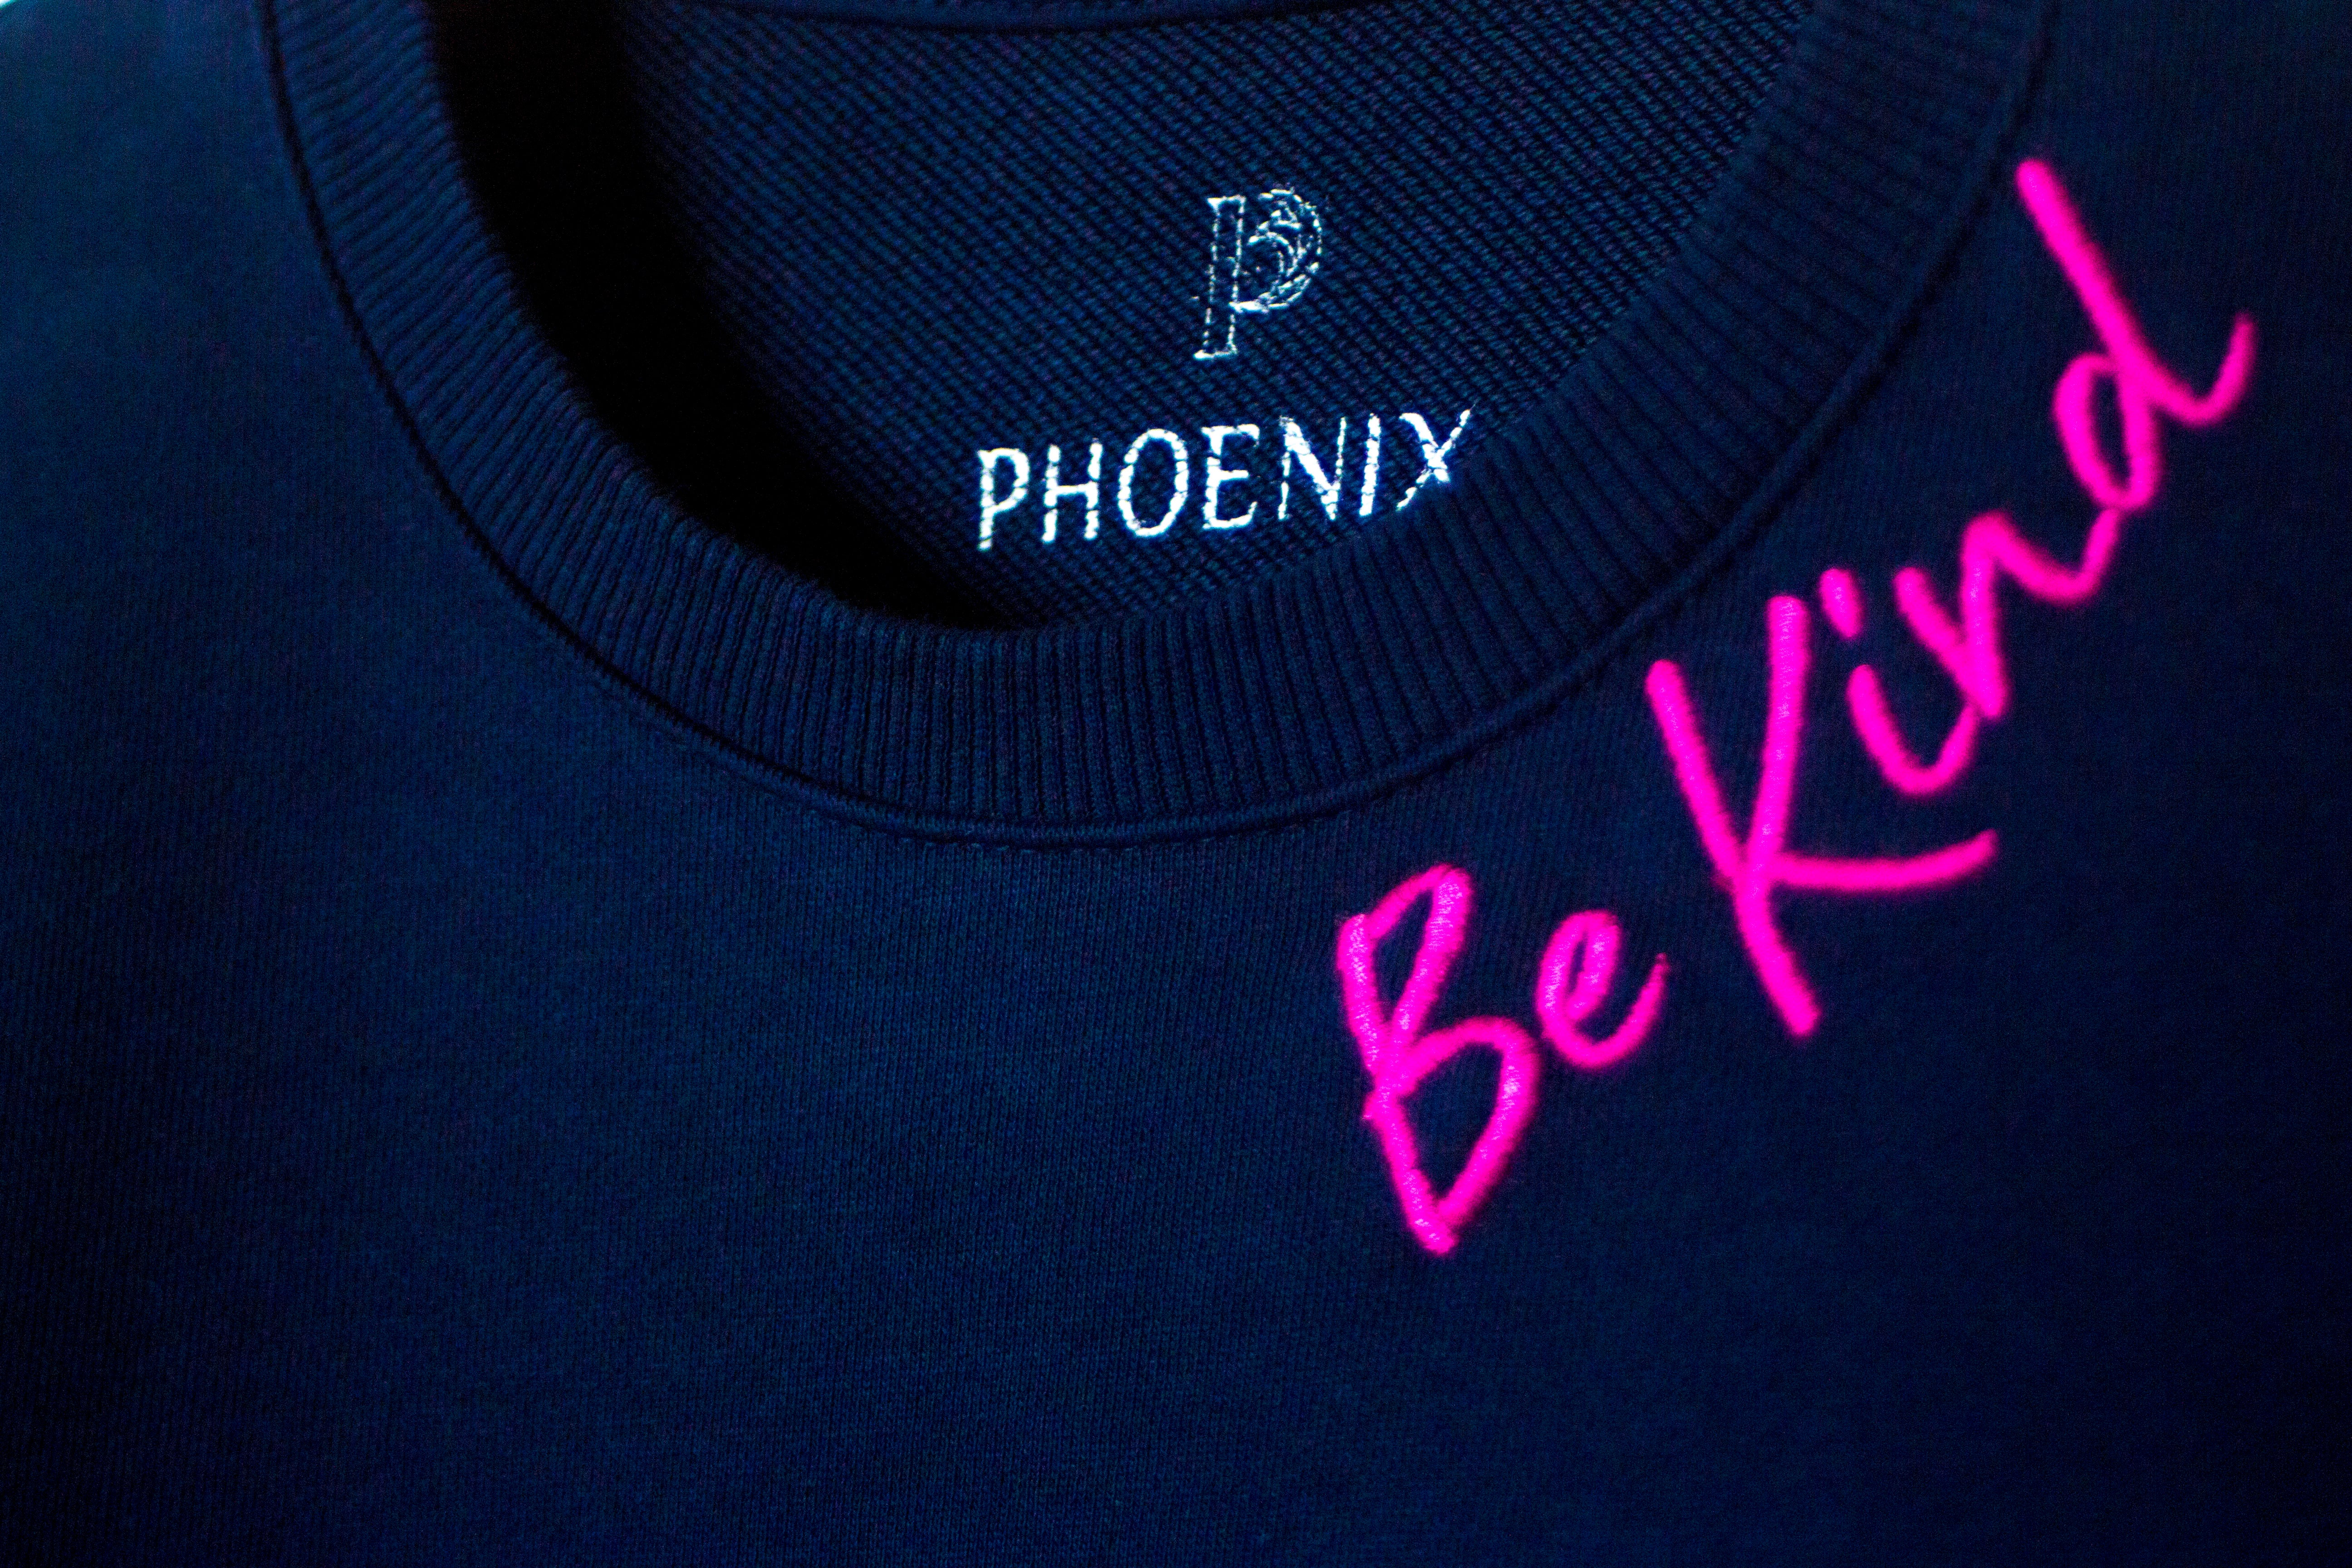 Phoenix | Be Kind (Navy & Fuchsia)